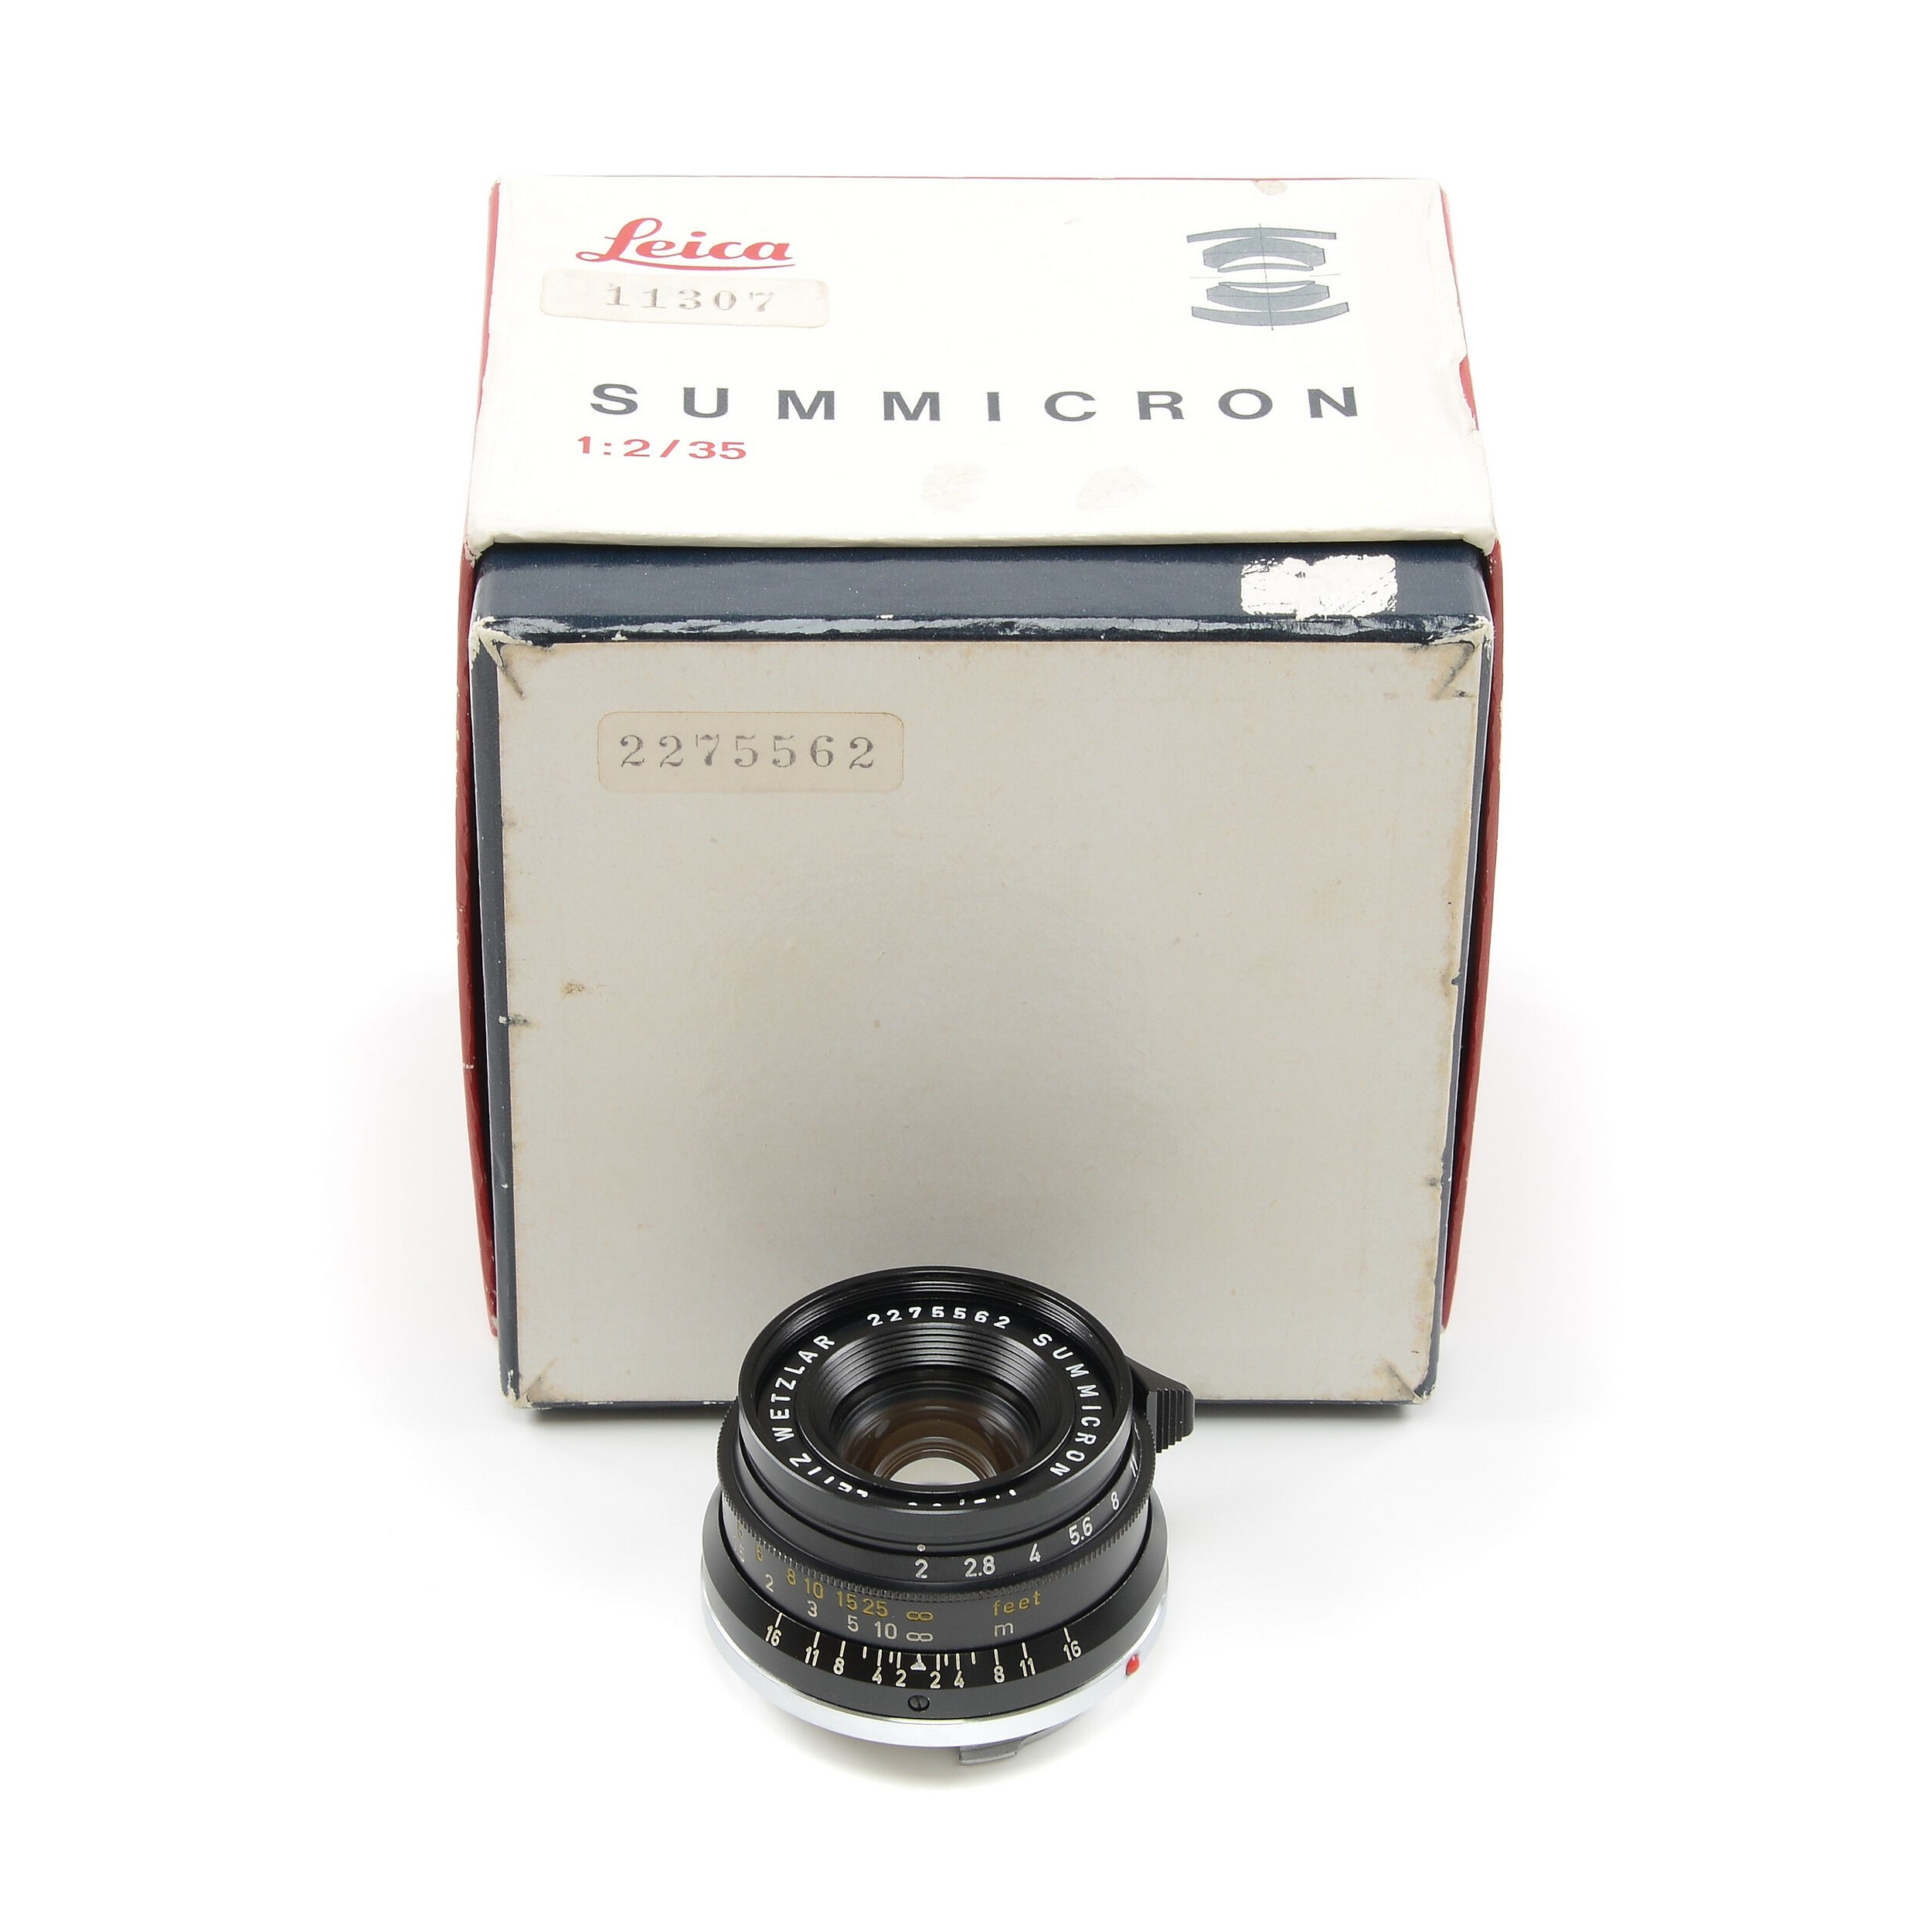 LEITZ 35MM F2 SUMMICRON 8 ELEMENT BLACK CHROME + BOX SAWOM / 11307 #4161